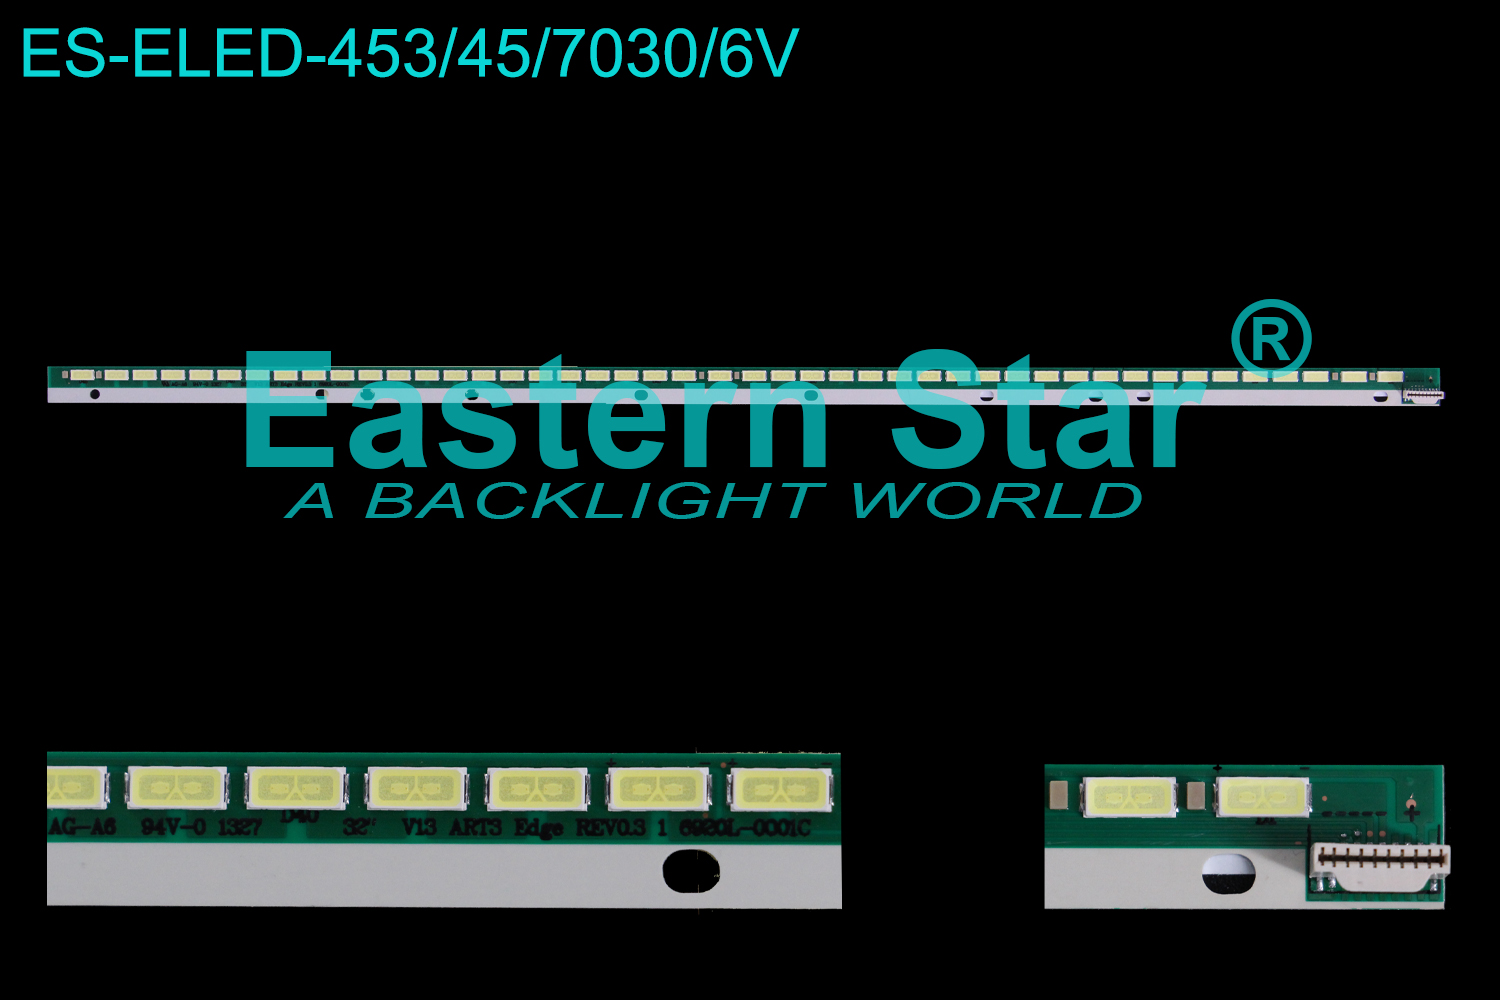 ES-ELED-453 ELED/EDGE TV backlight use for 32'' Lg 32LS575T AT0903B 32" V13 ART3 EDGE  REV0.3 1 6920L-0001C LED STRIPS(1）